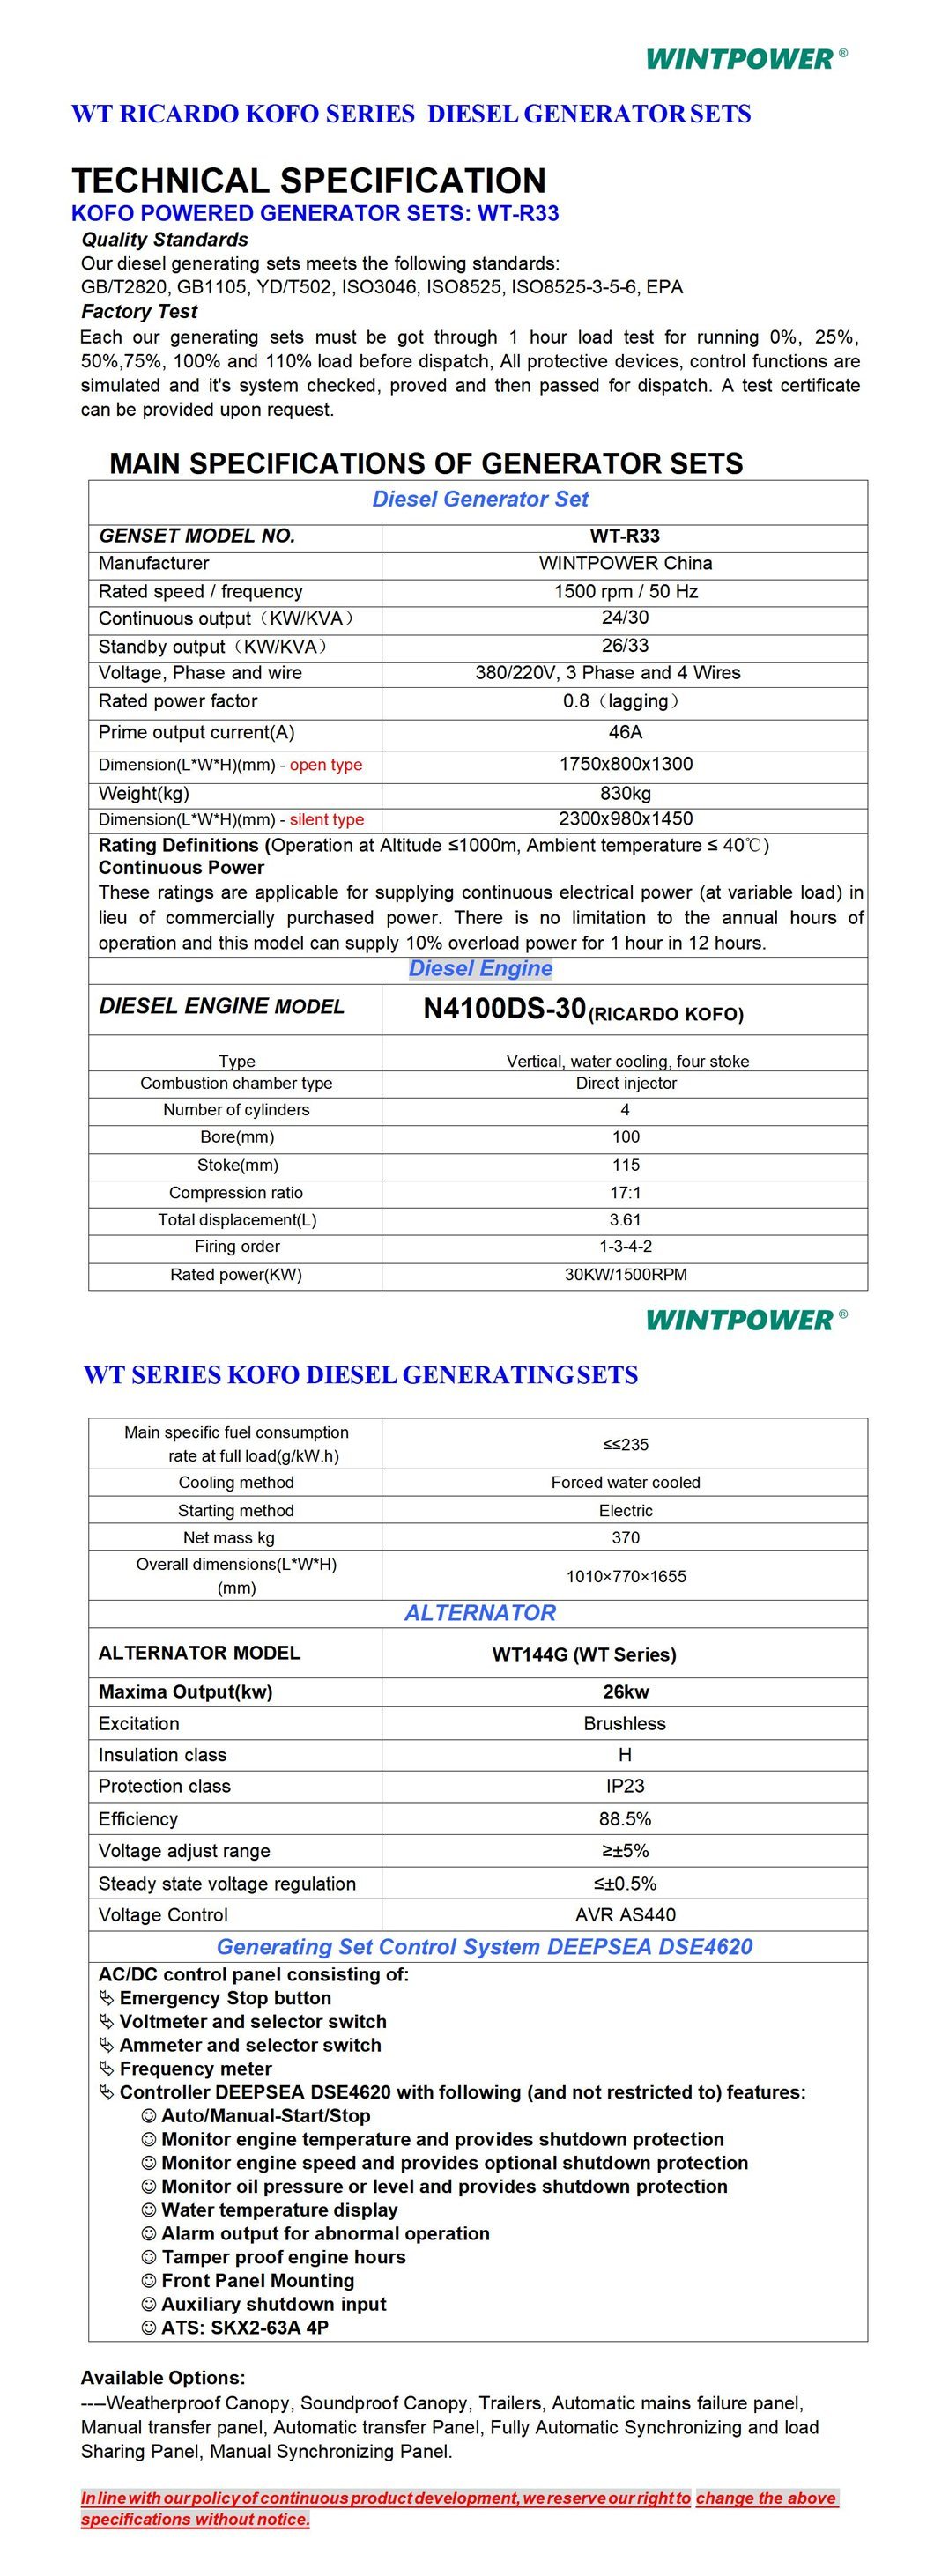 Weichai Kofo Ricardo Diesel Generator Set Dg Genset 100kVA 4rt55-88d R6105zlds 110kVA 4rt55-110d 120kVA R6105azlds 138kVA R6105bzlds 165kVA R6105bzlds